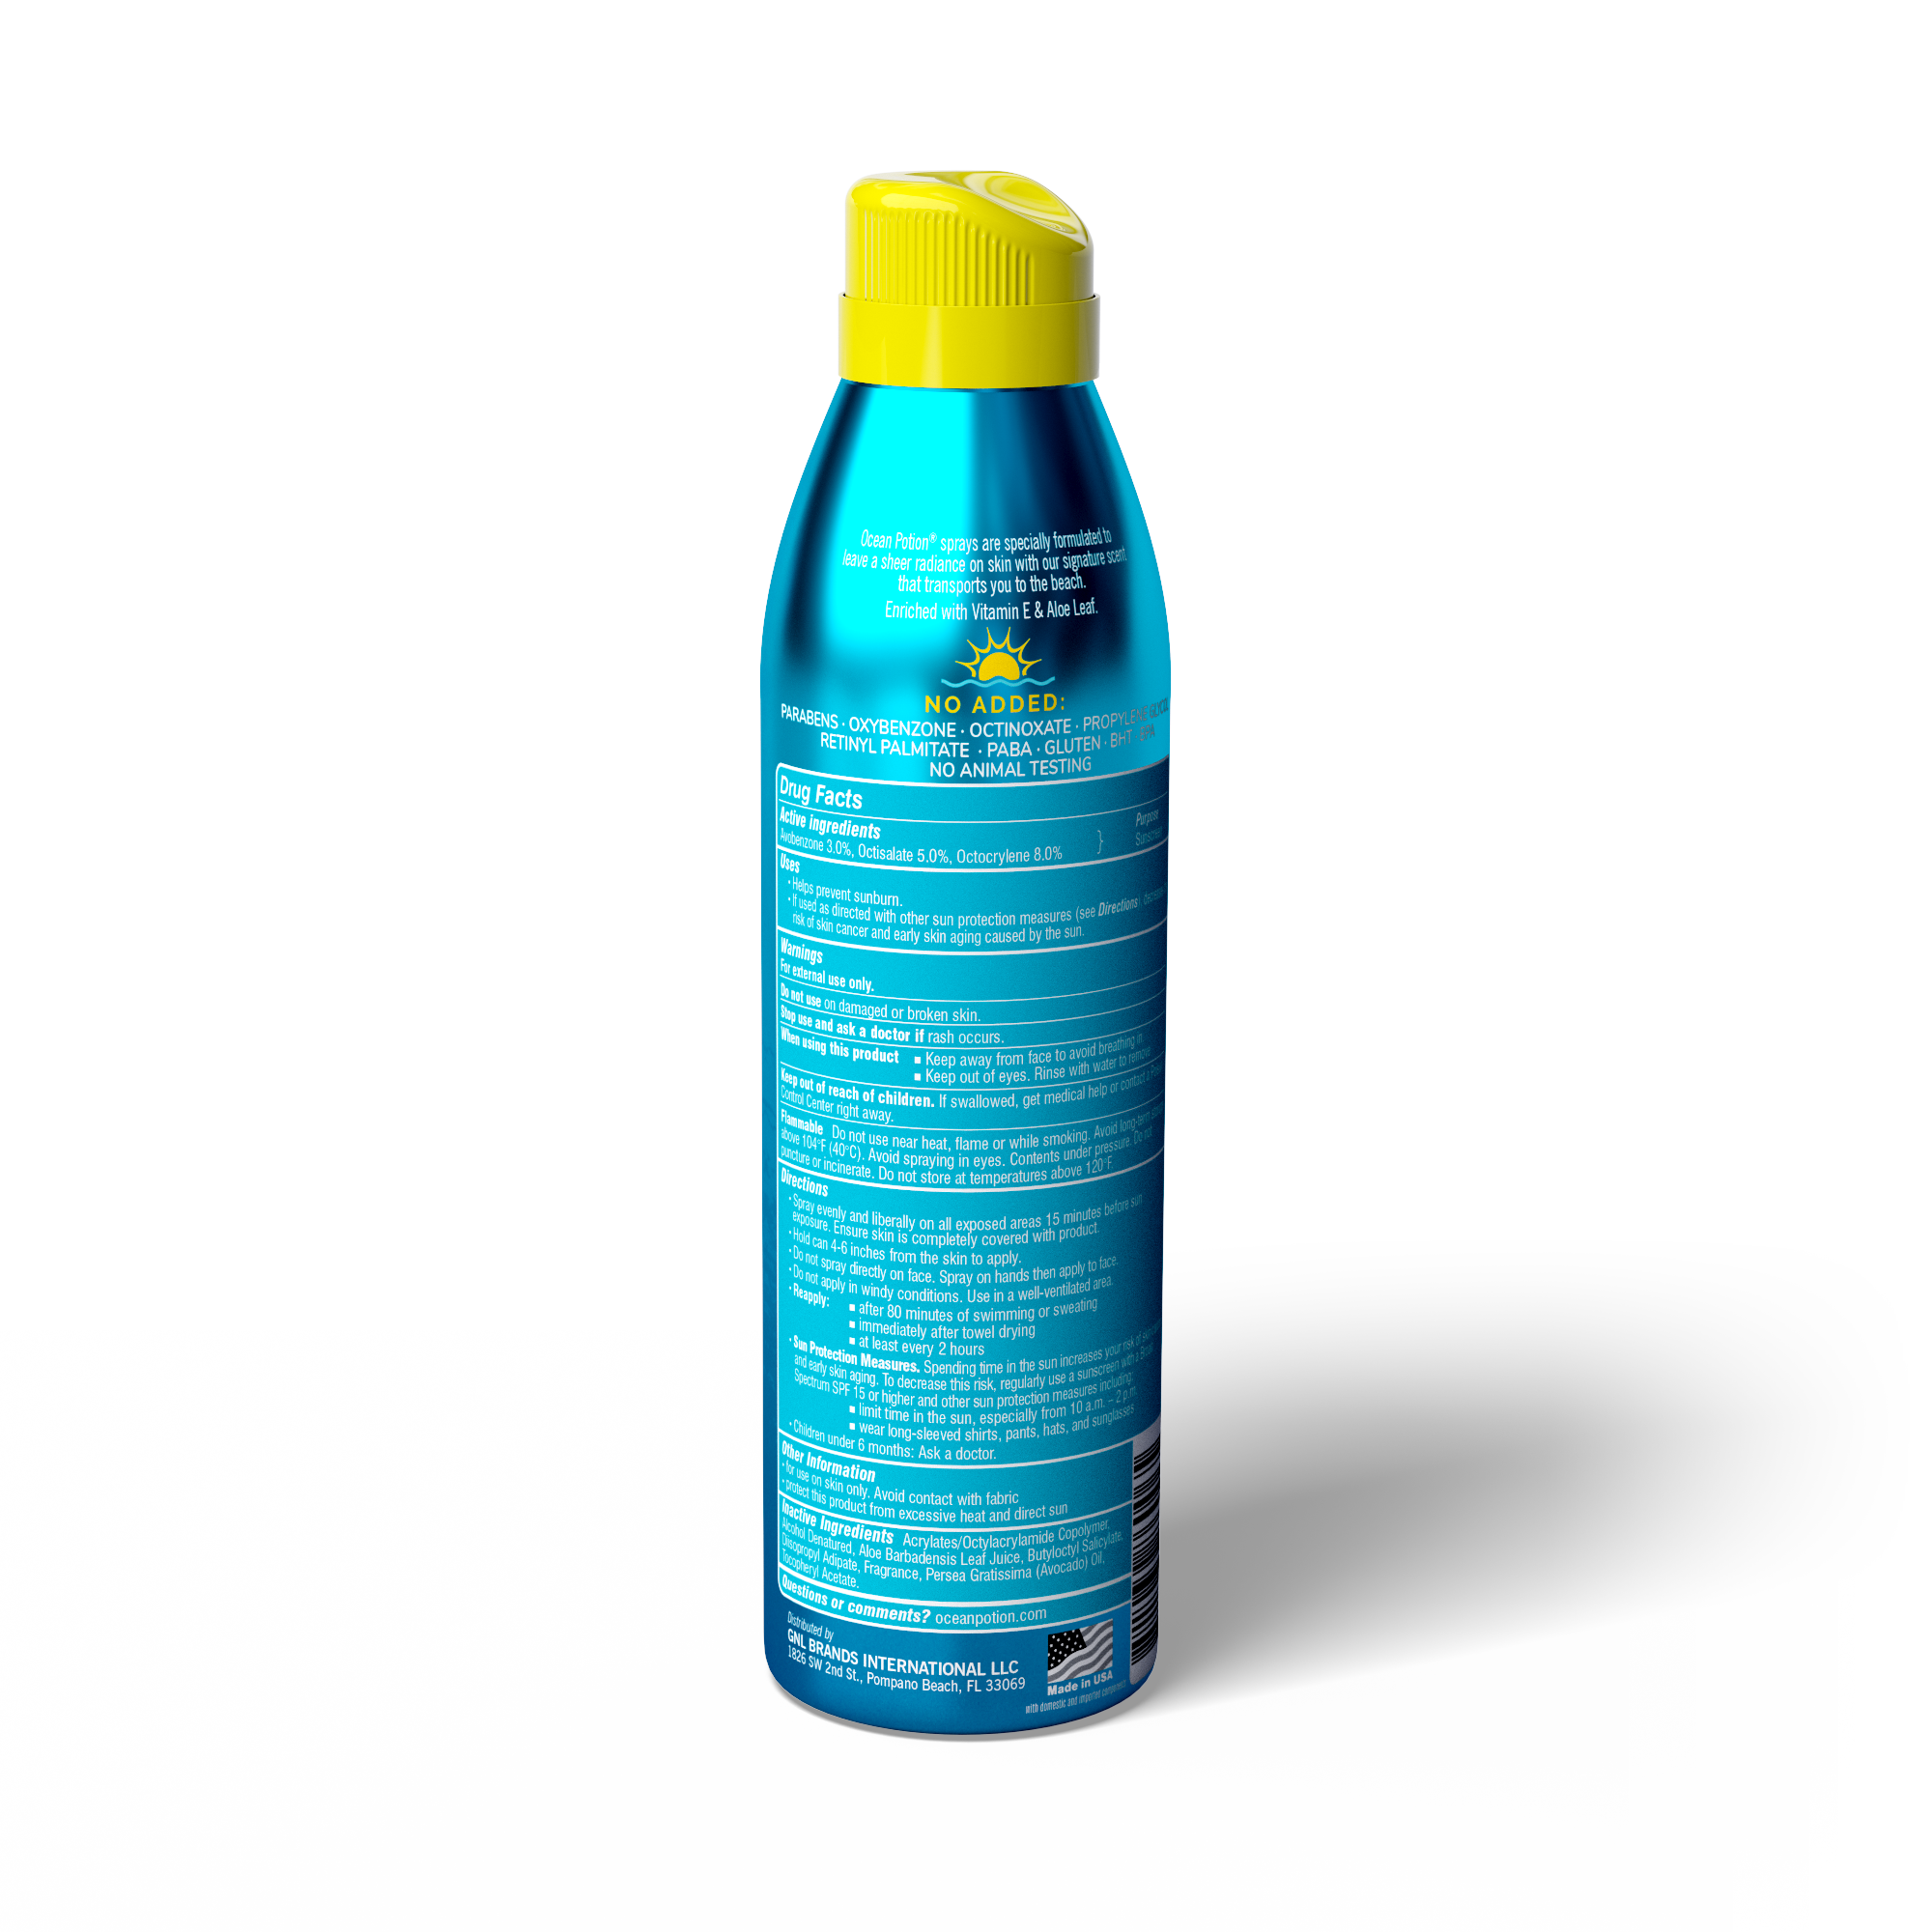 SPF 50 Sunscreen Spray